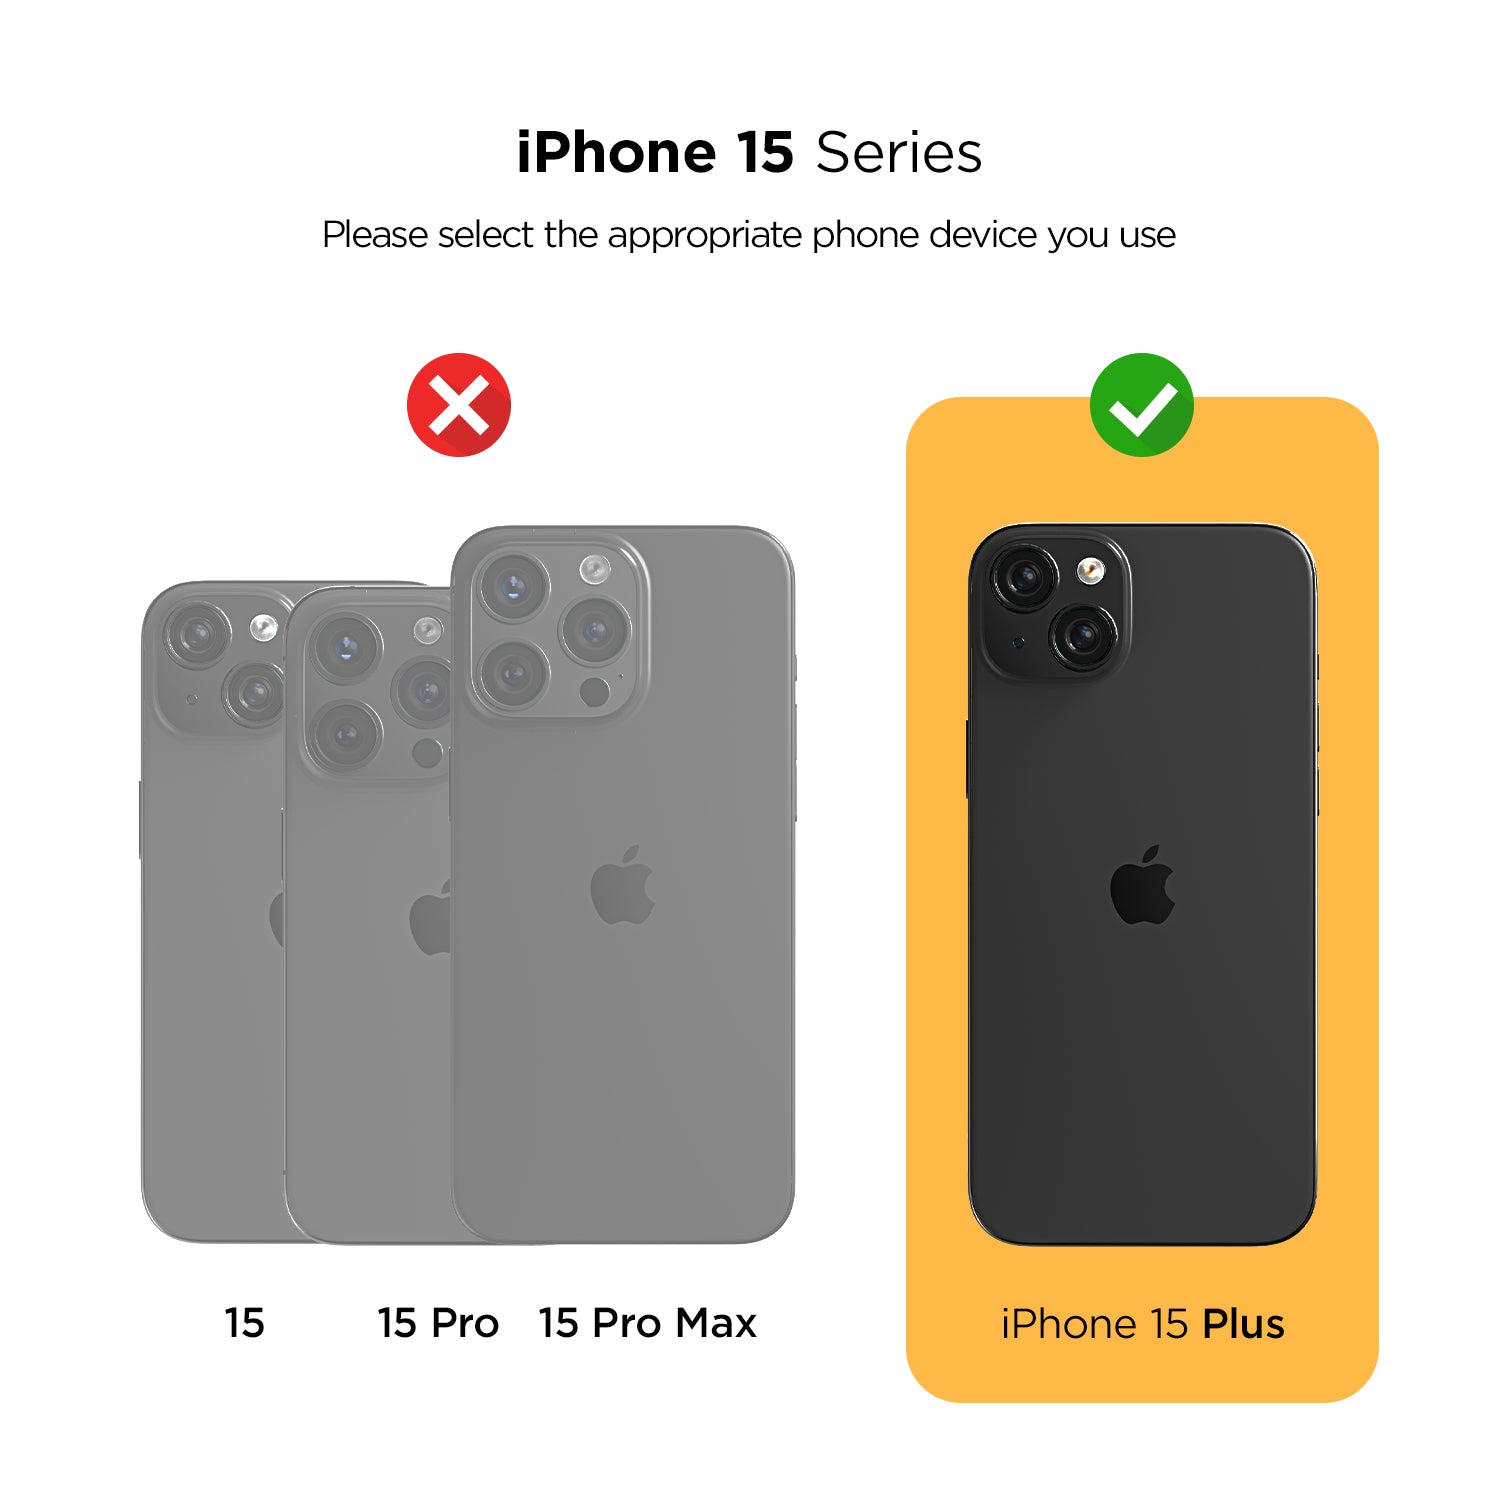 iPhone 15 Plus Case Damda Glide Pro